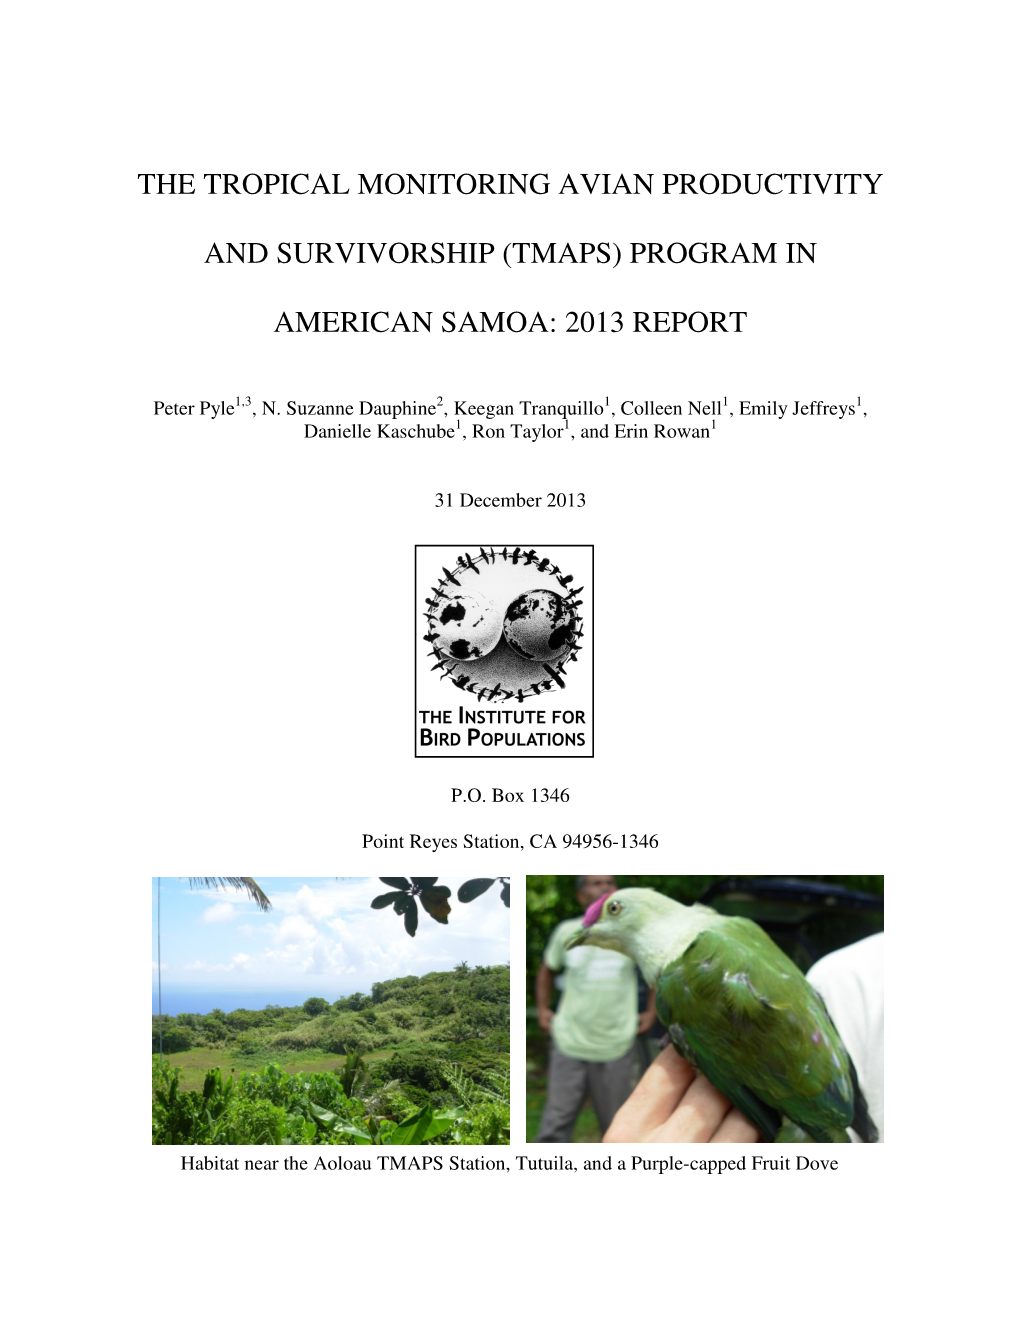 The Tropical Monitoring Avian Productivity and Survivorship (TMAPS) Program in American Samoa: 2013 Report